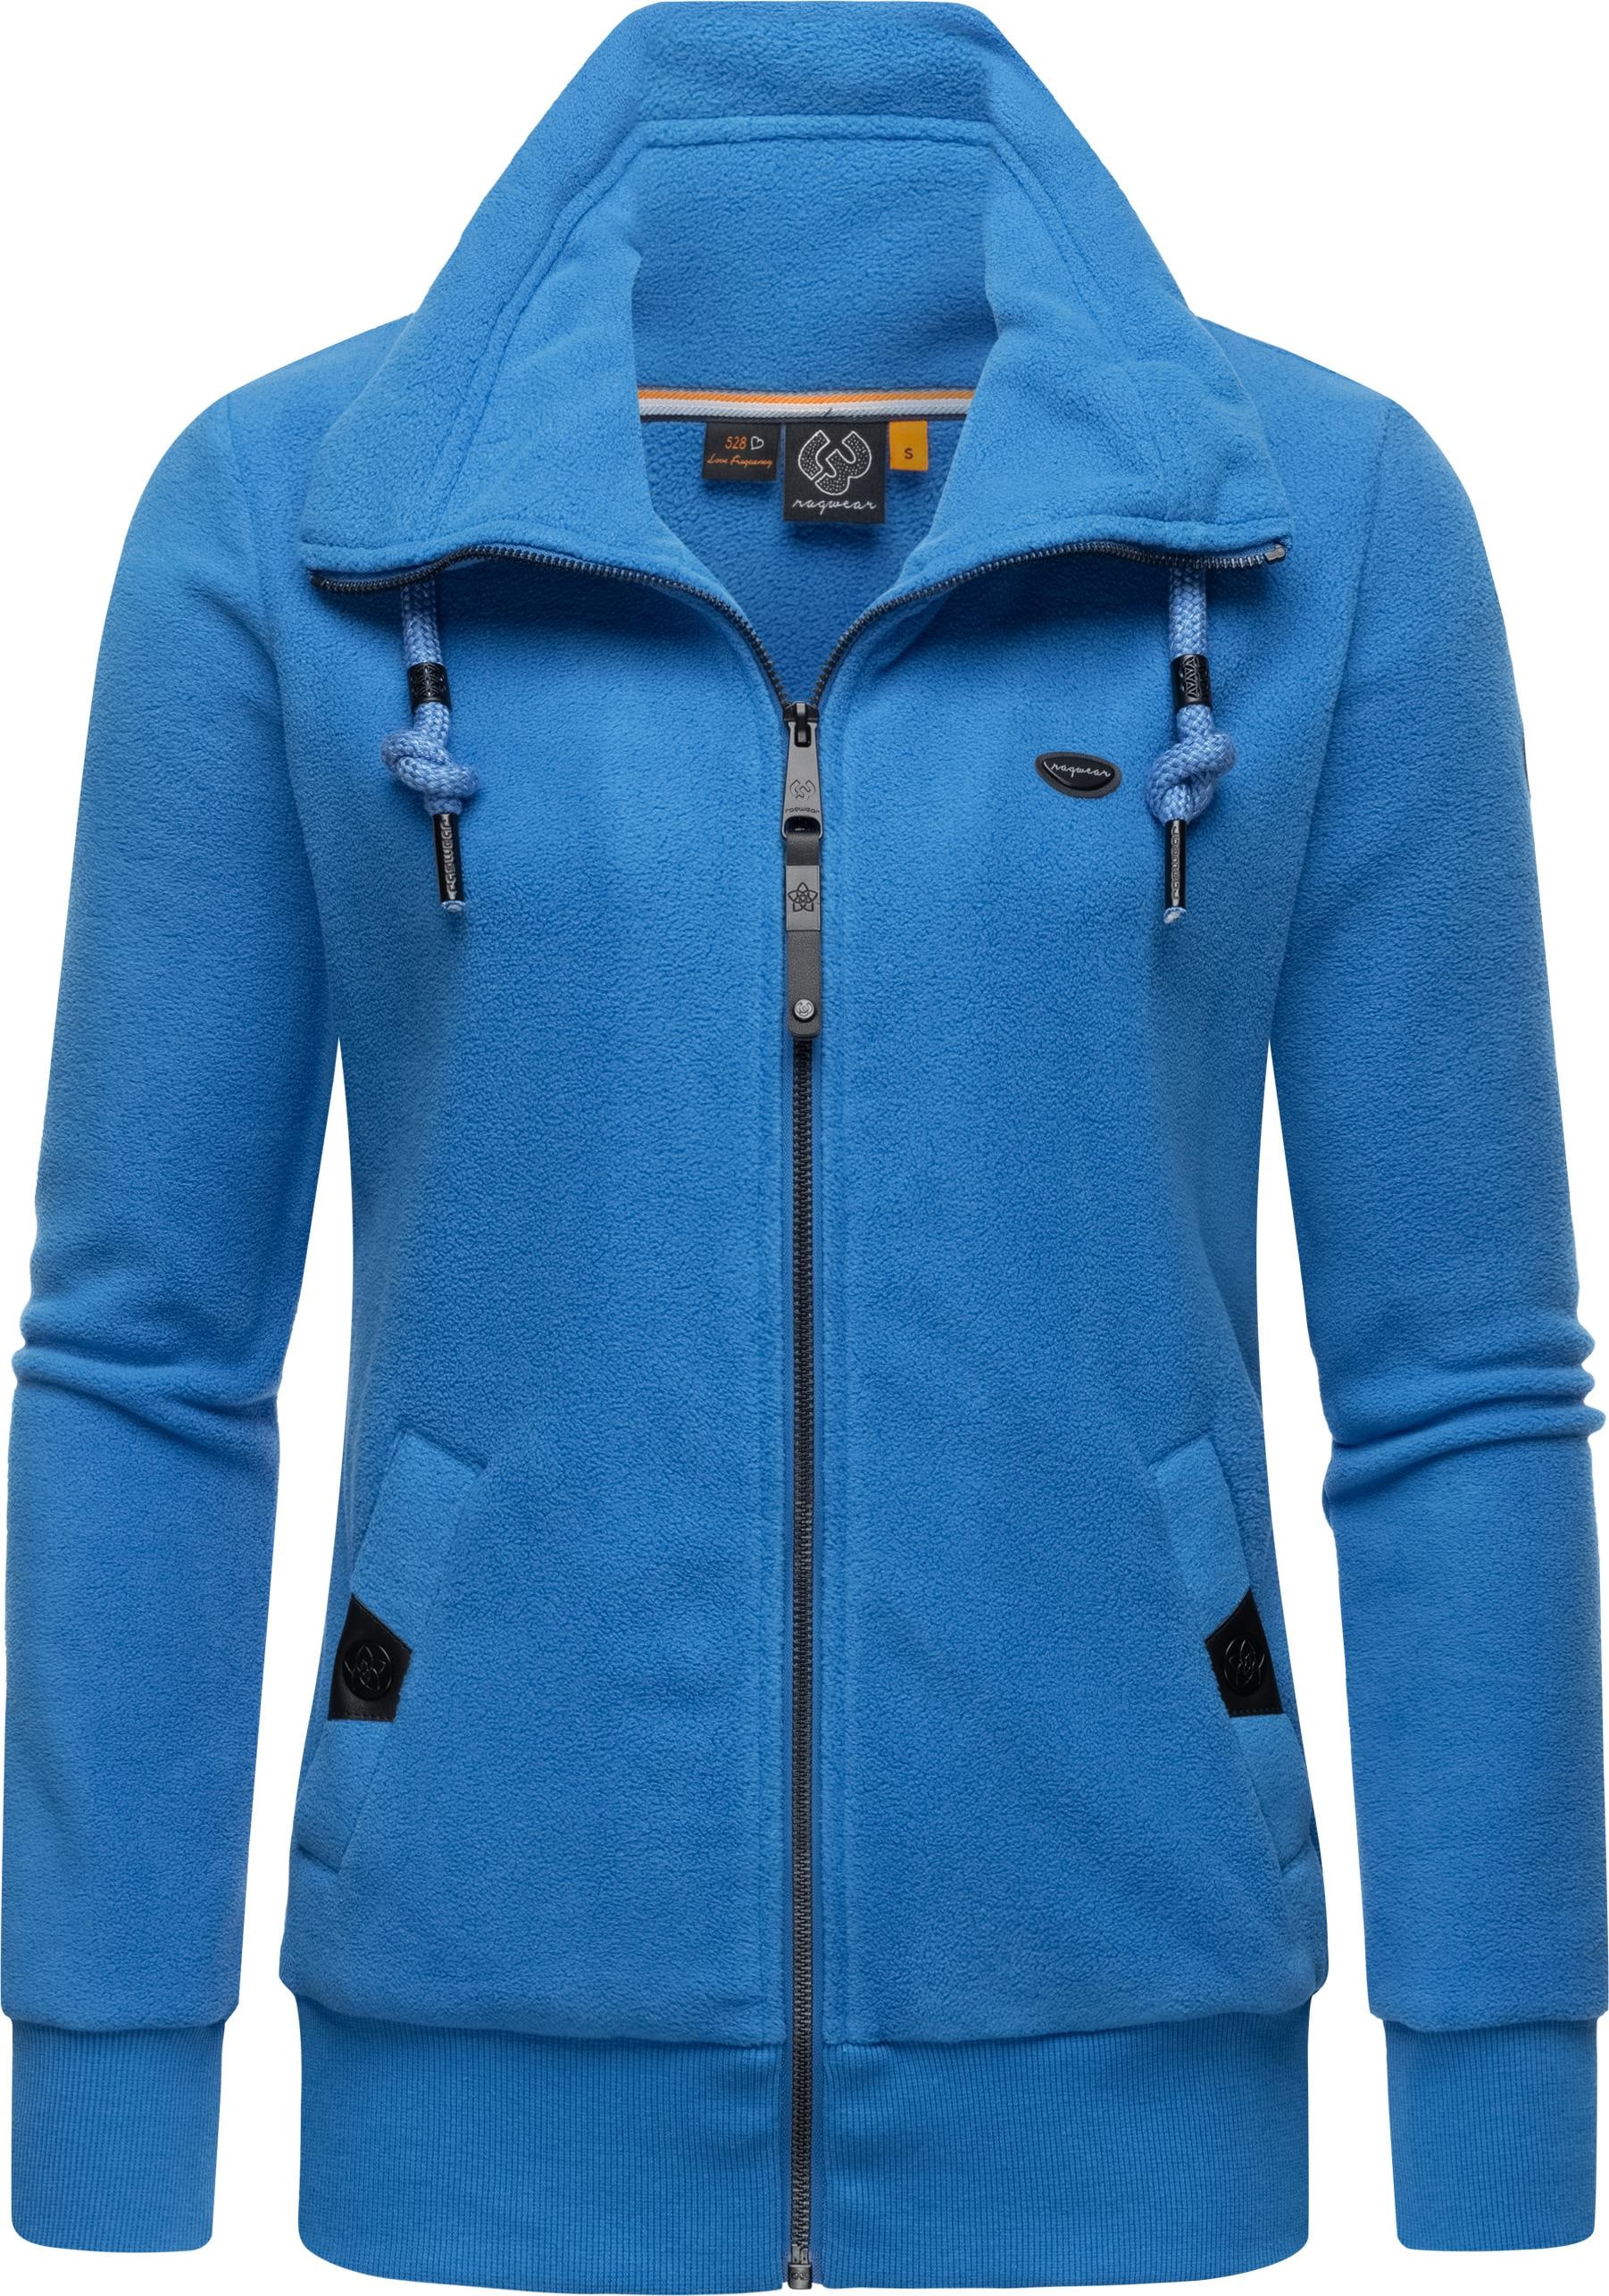 Sweatjacke »Rylie Fleece Zip Solid«, weicher Fleece Zip-Sweater mit Kordeln